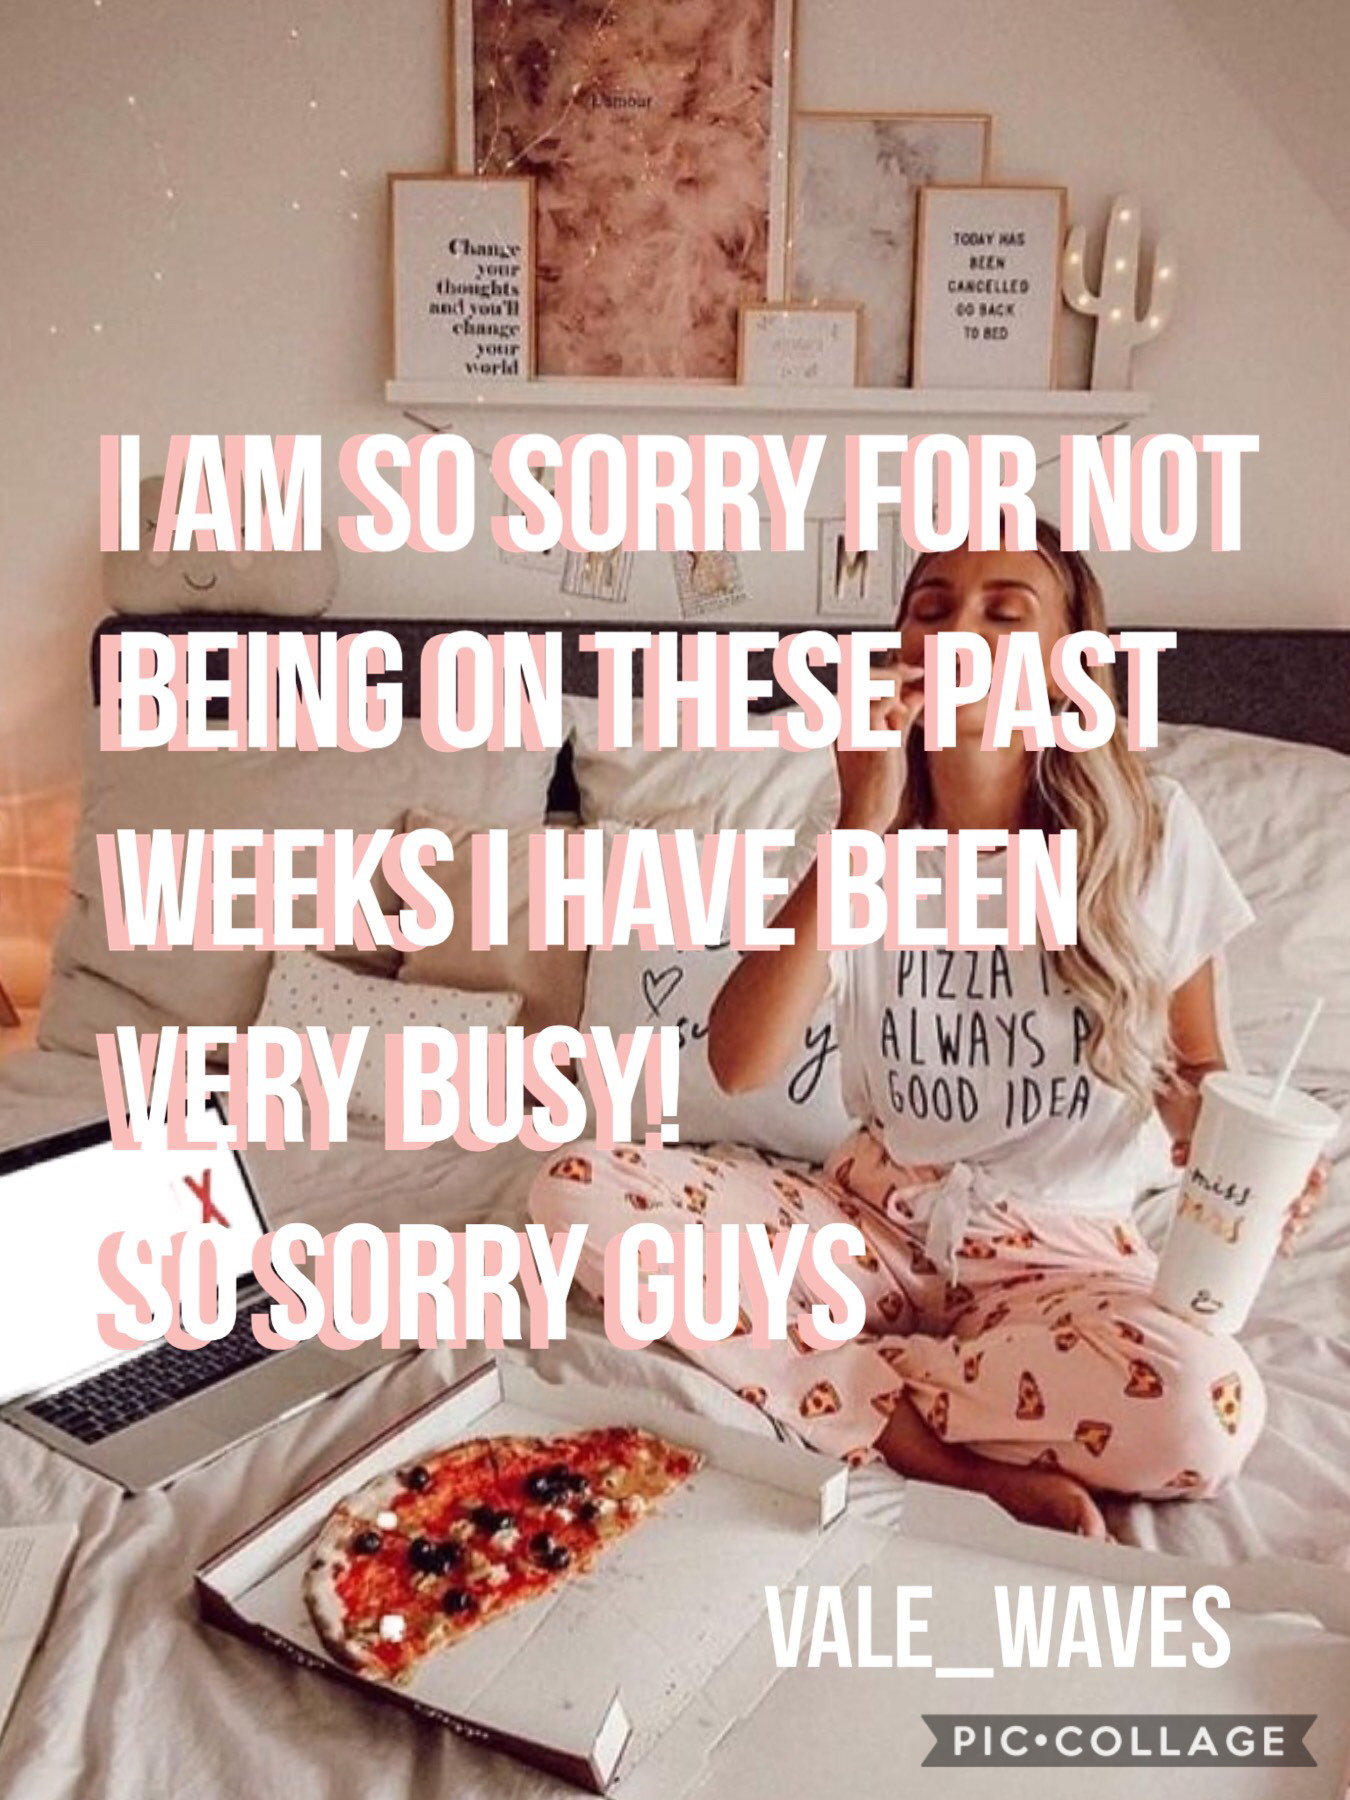 Sorry guys

Lysm💕🌊